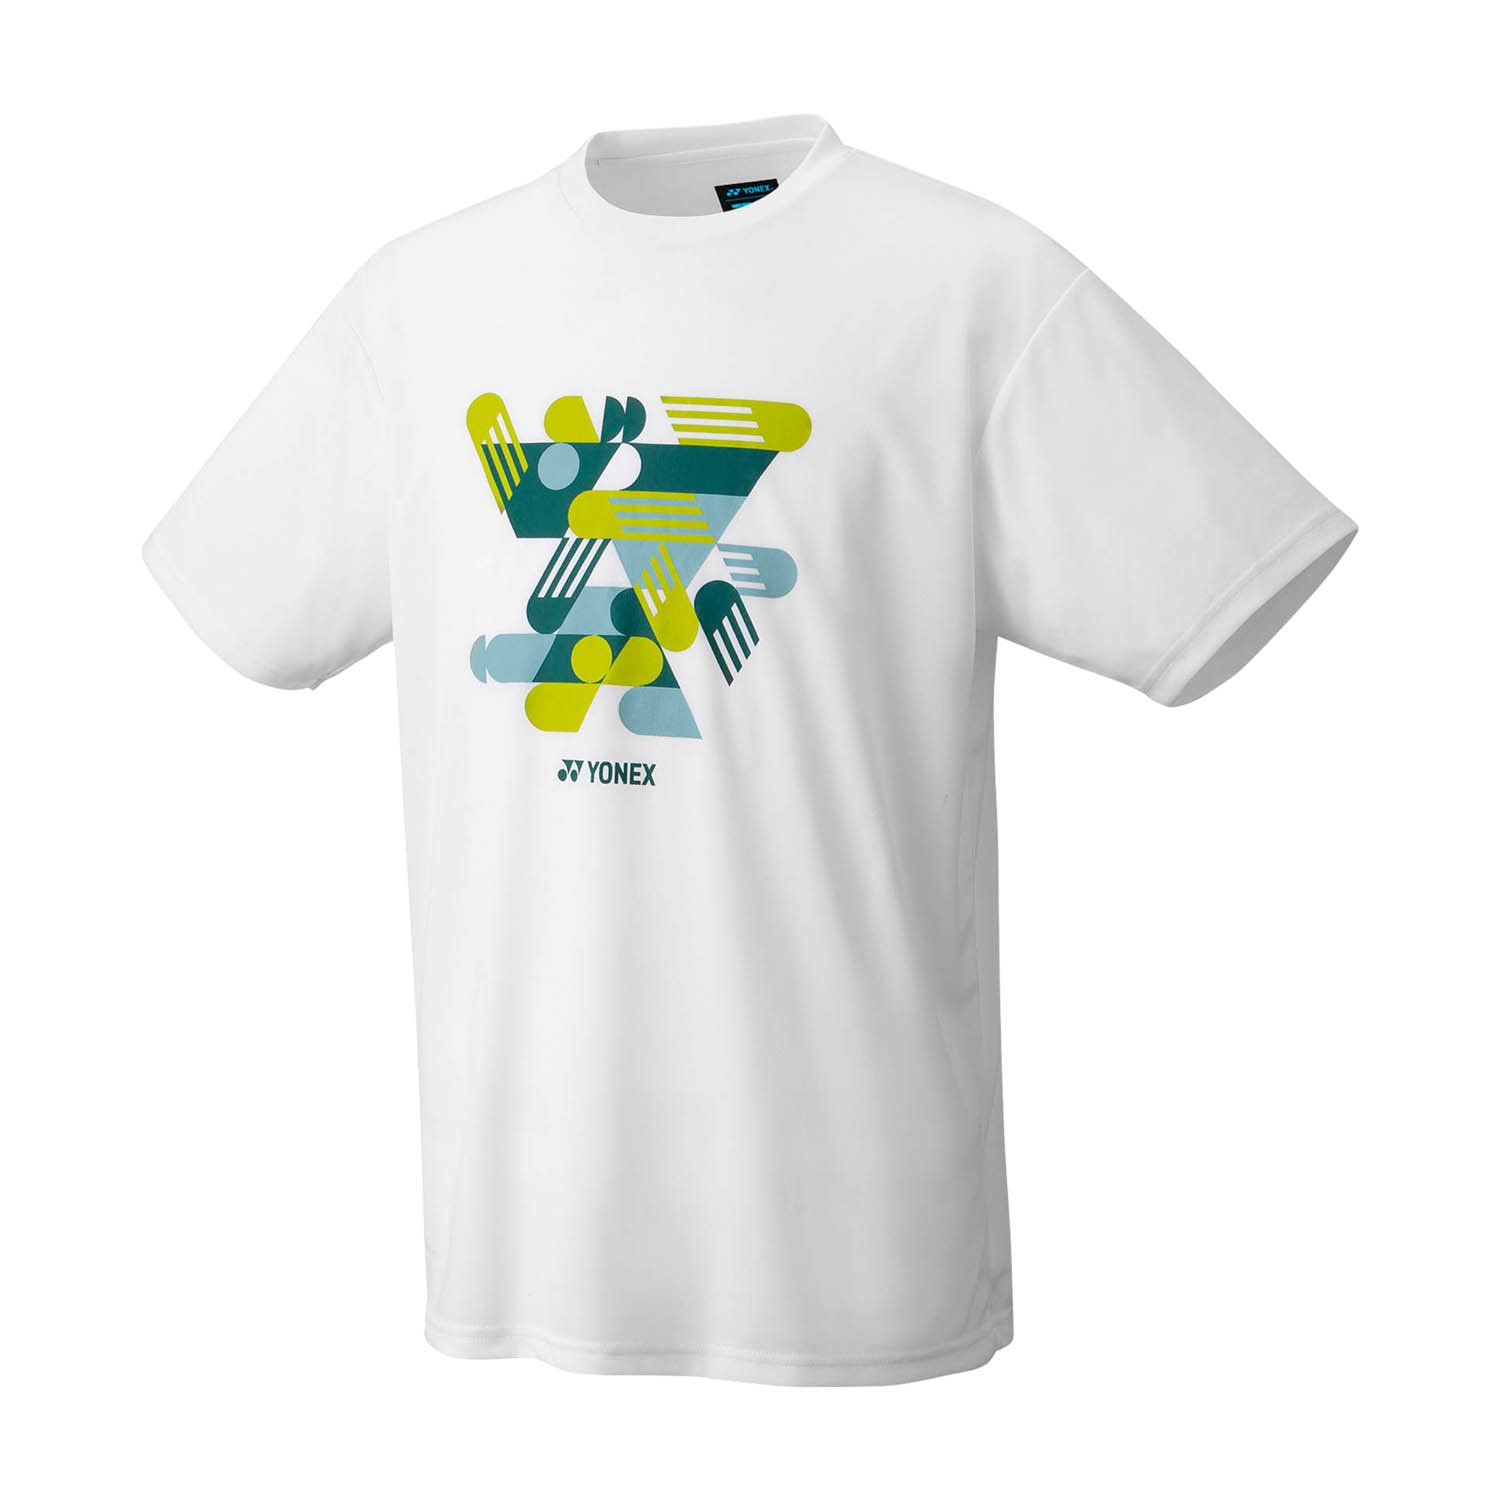 Yonex Practice Pro Camiseta Niños - White